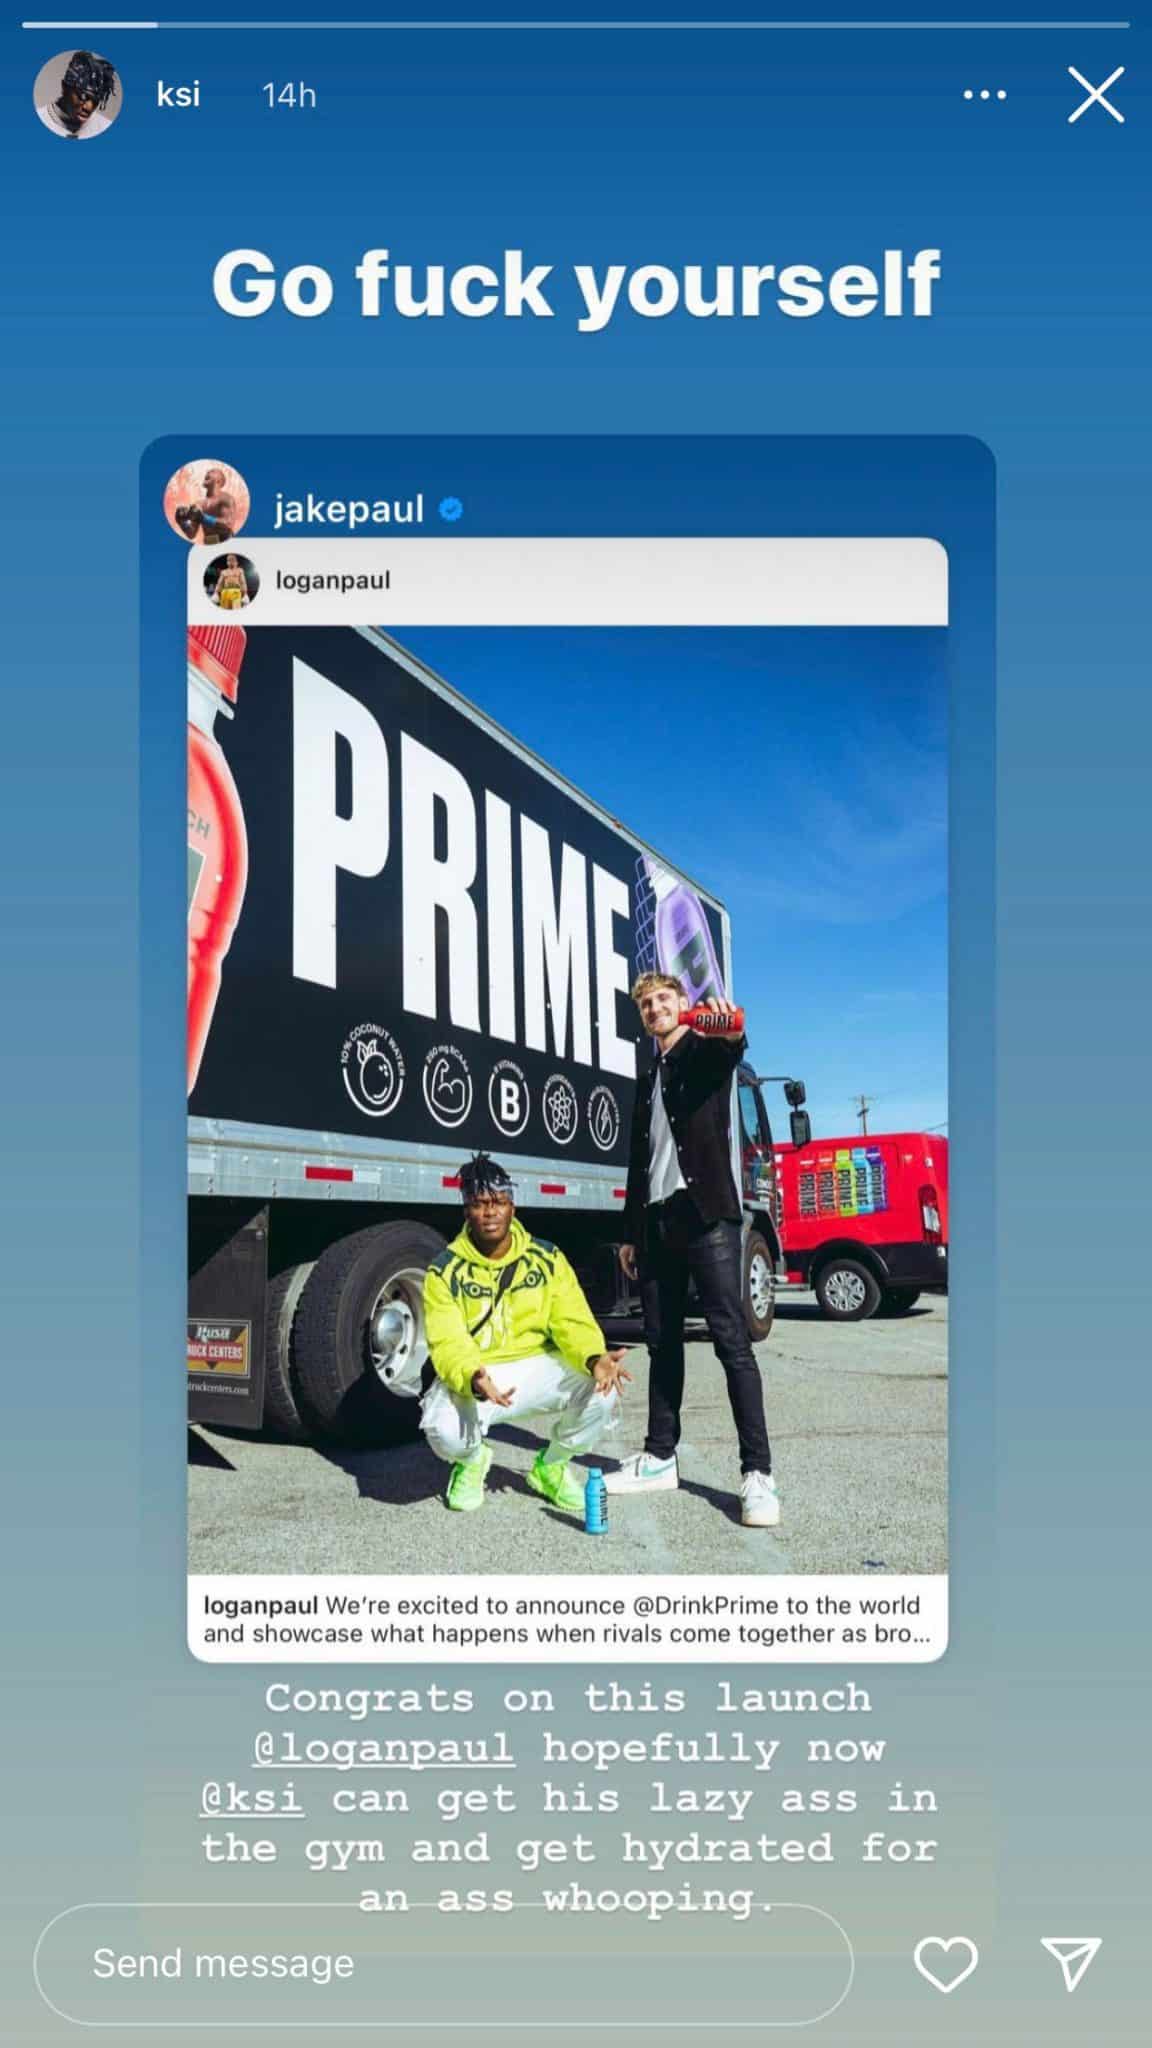 KSI responds to Jake Paul on Instagram